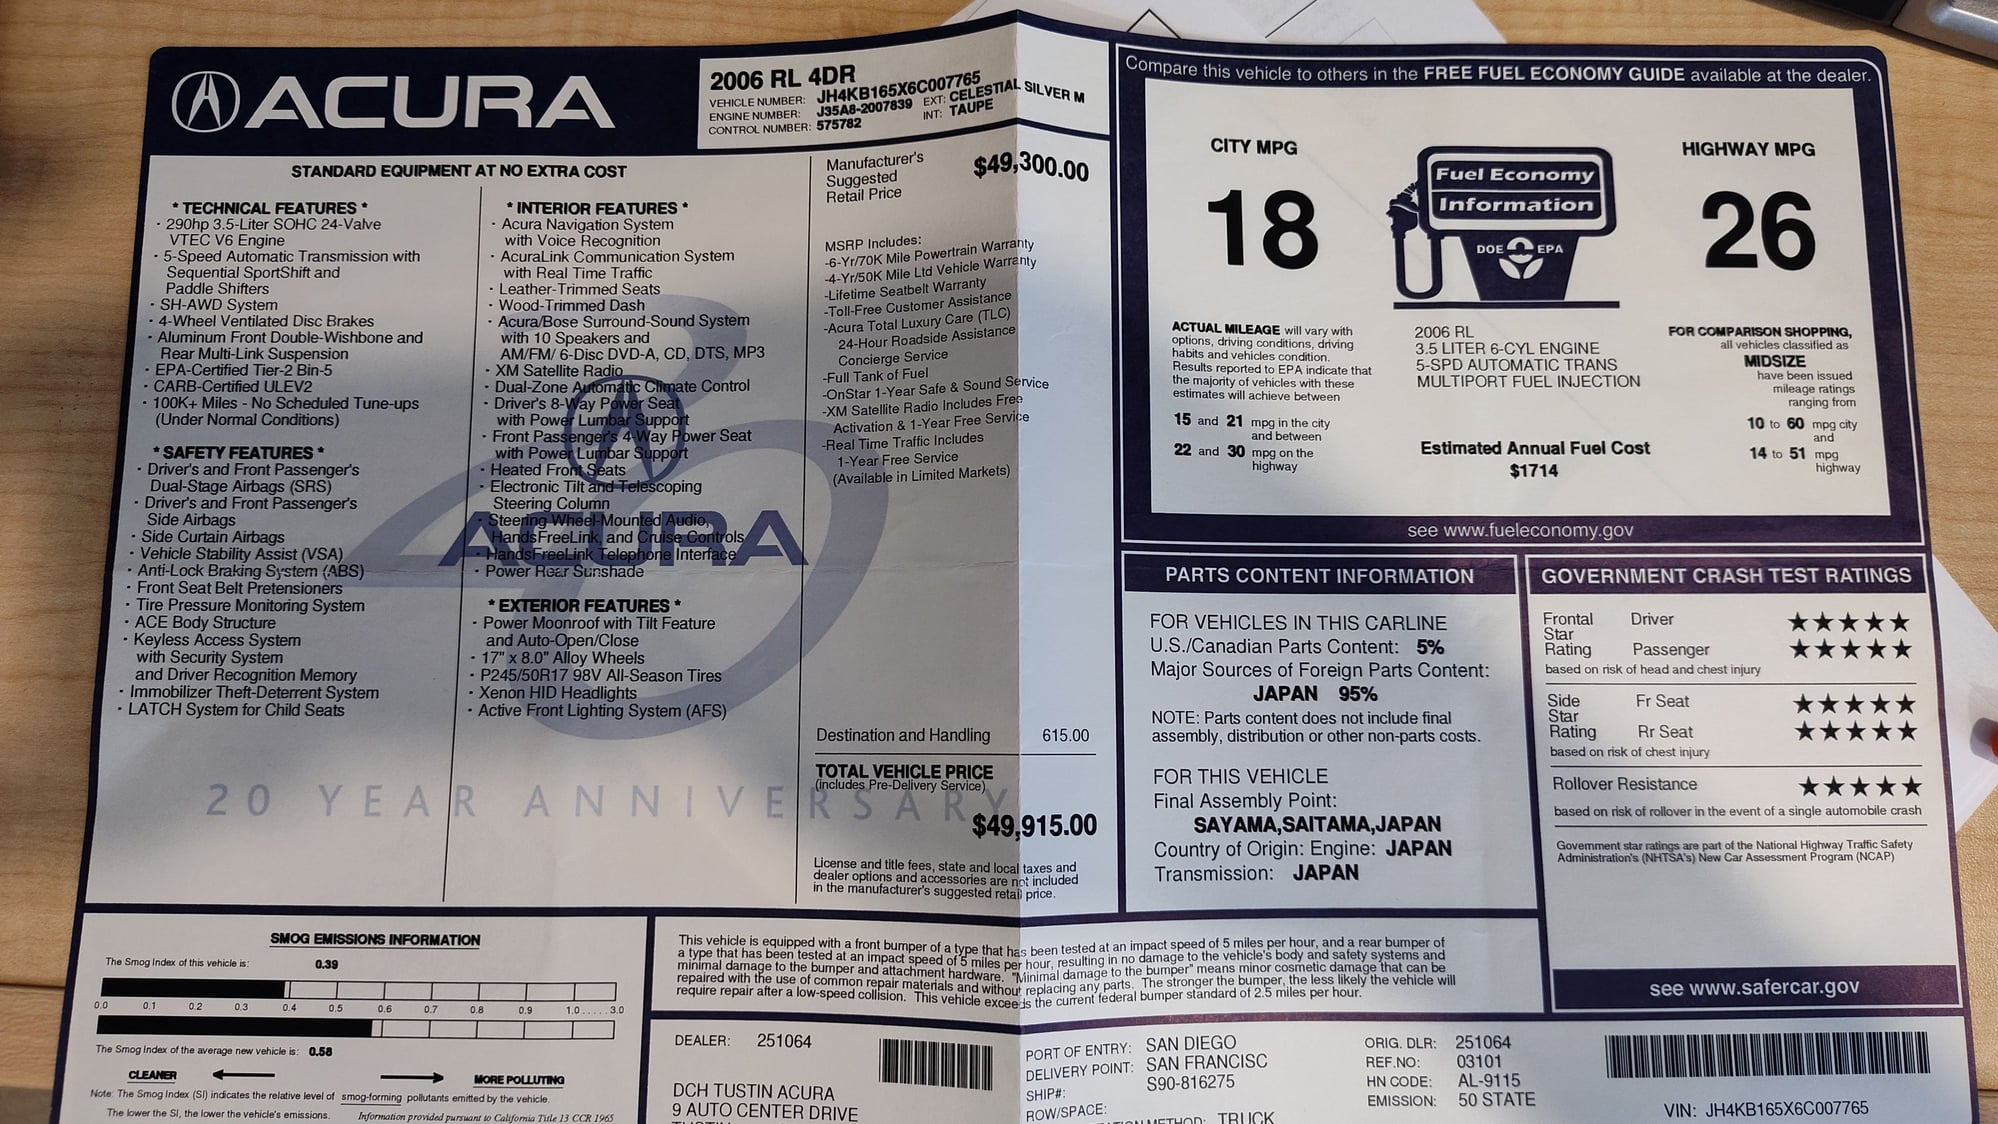 2006 Acura RL - FS: Pampered 2006 Acura RL w/A-Spec wheels, bluetooth audio, new glovebox - Used - VIN jh4kb165x6c007765 - 142,200 Miles - 6 cyl - AWD - Automatic - Sedan - Silver - San Diego, CA 92131, United States